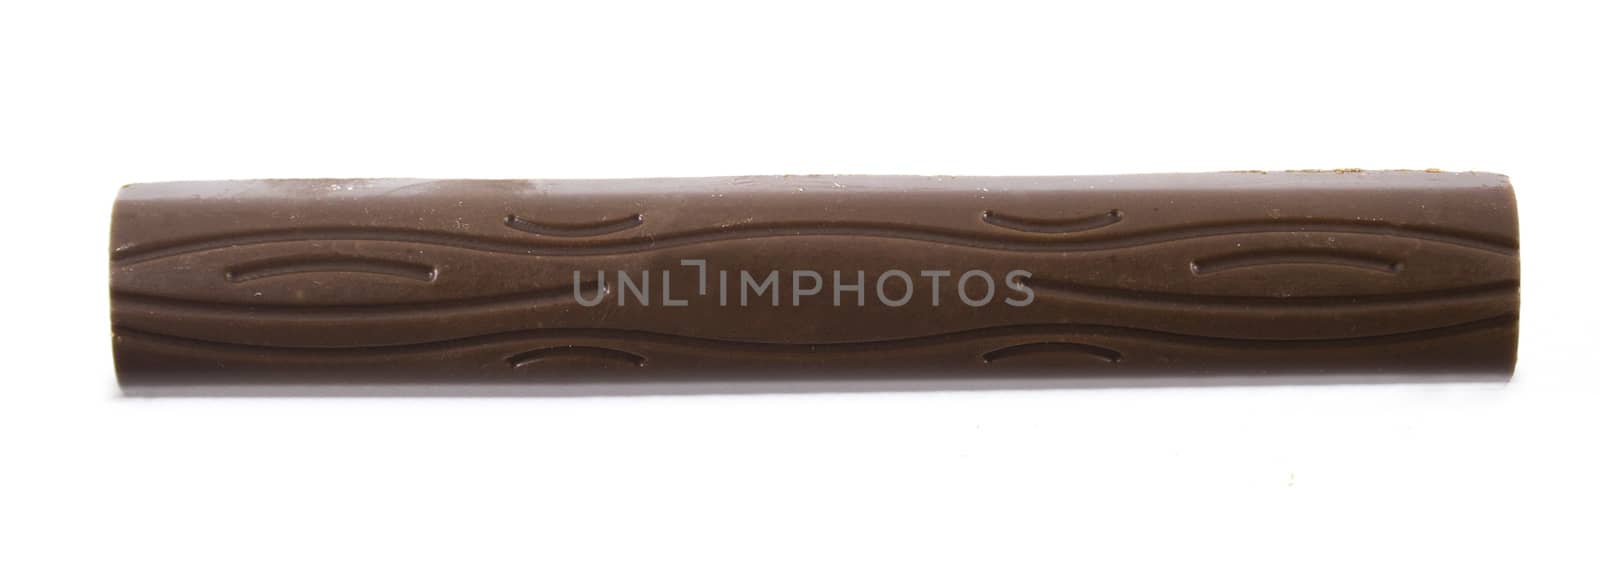 chocolate bar by designsstock